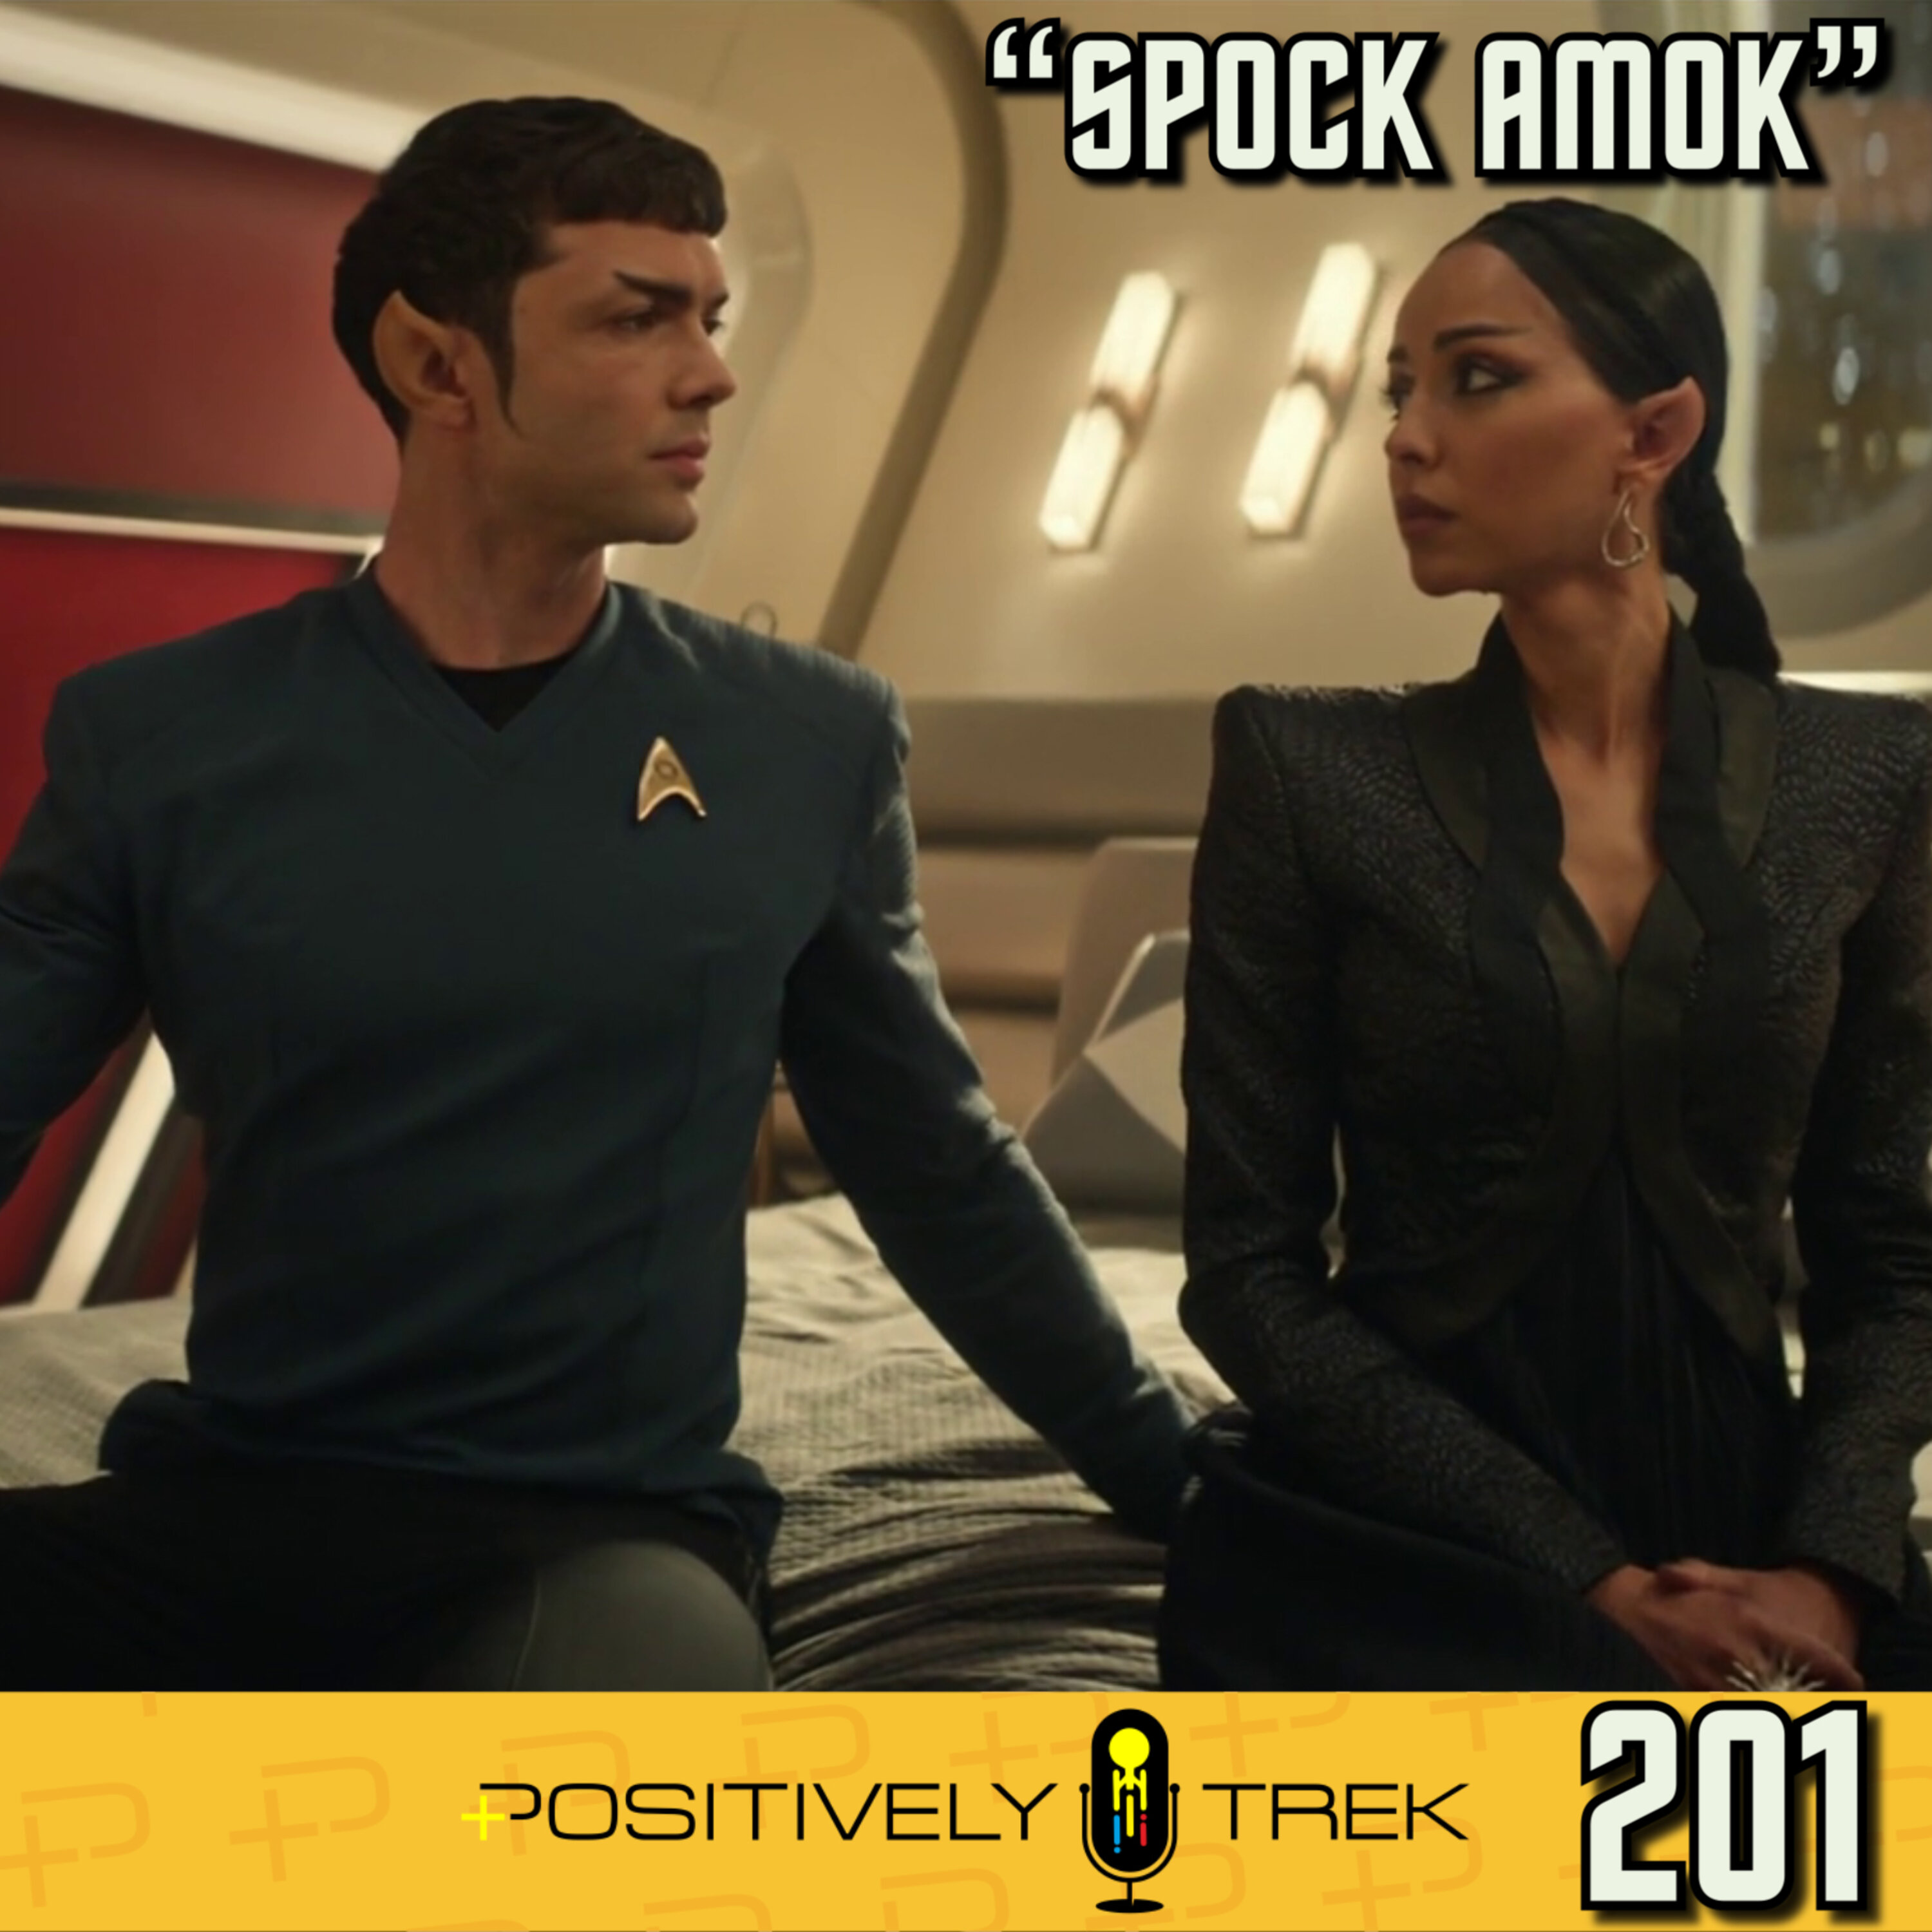 Strange New Worlds Review: “Spock Amok” (1.05) Image